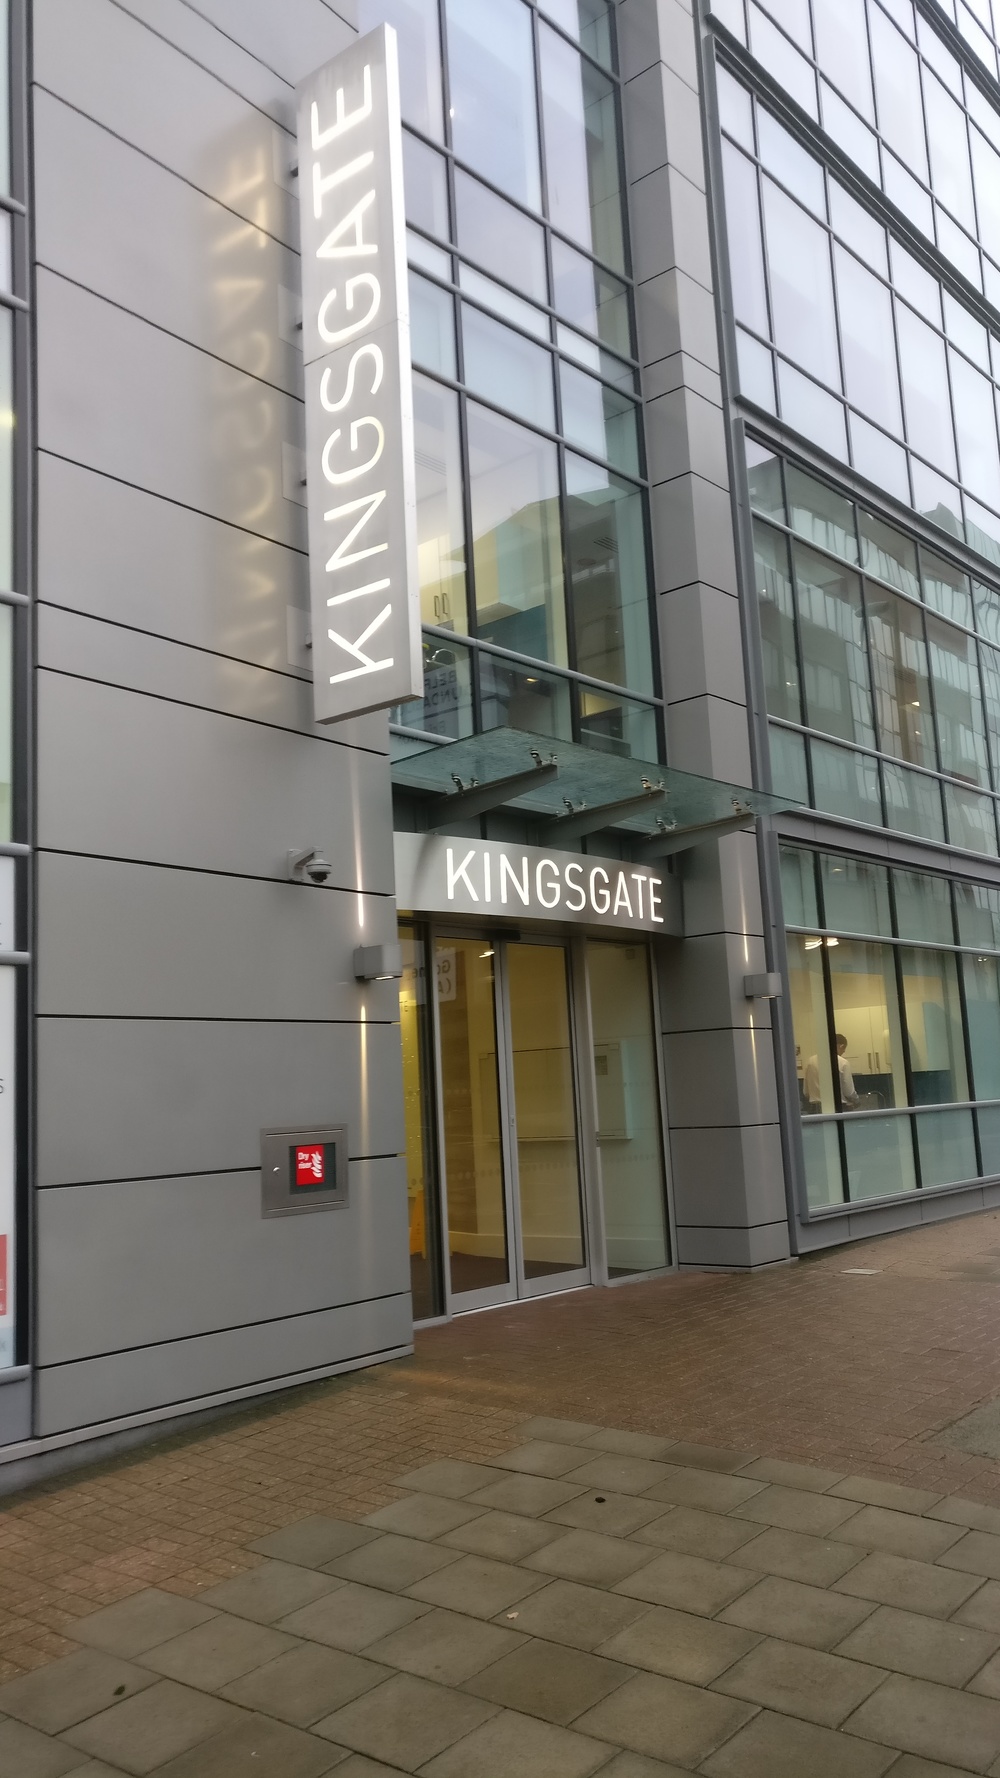 Entrance to Kingsgate, Redhill